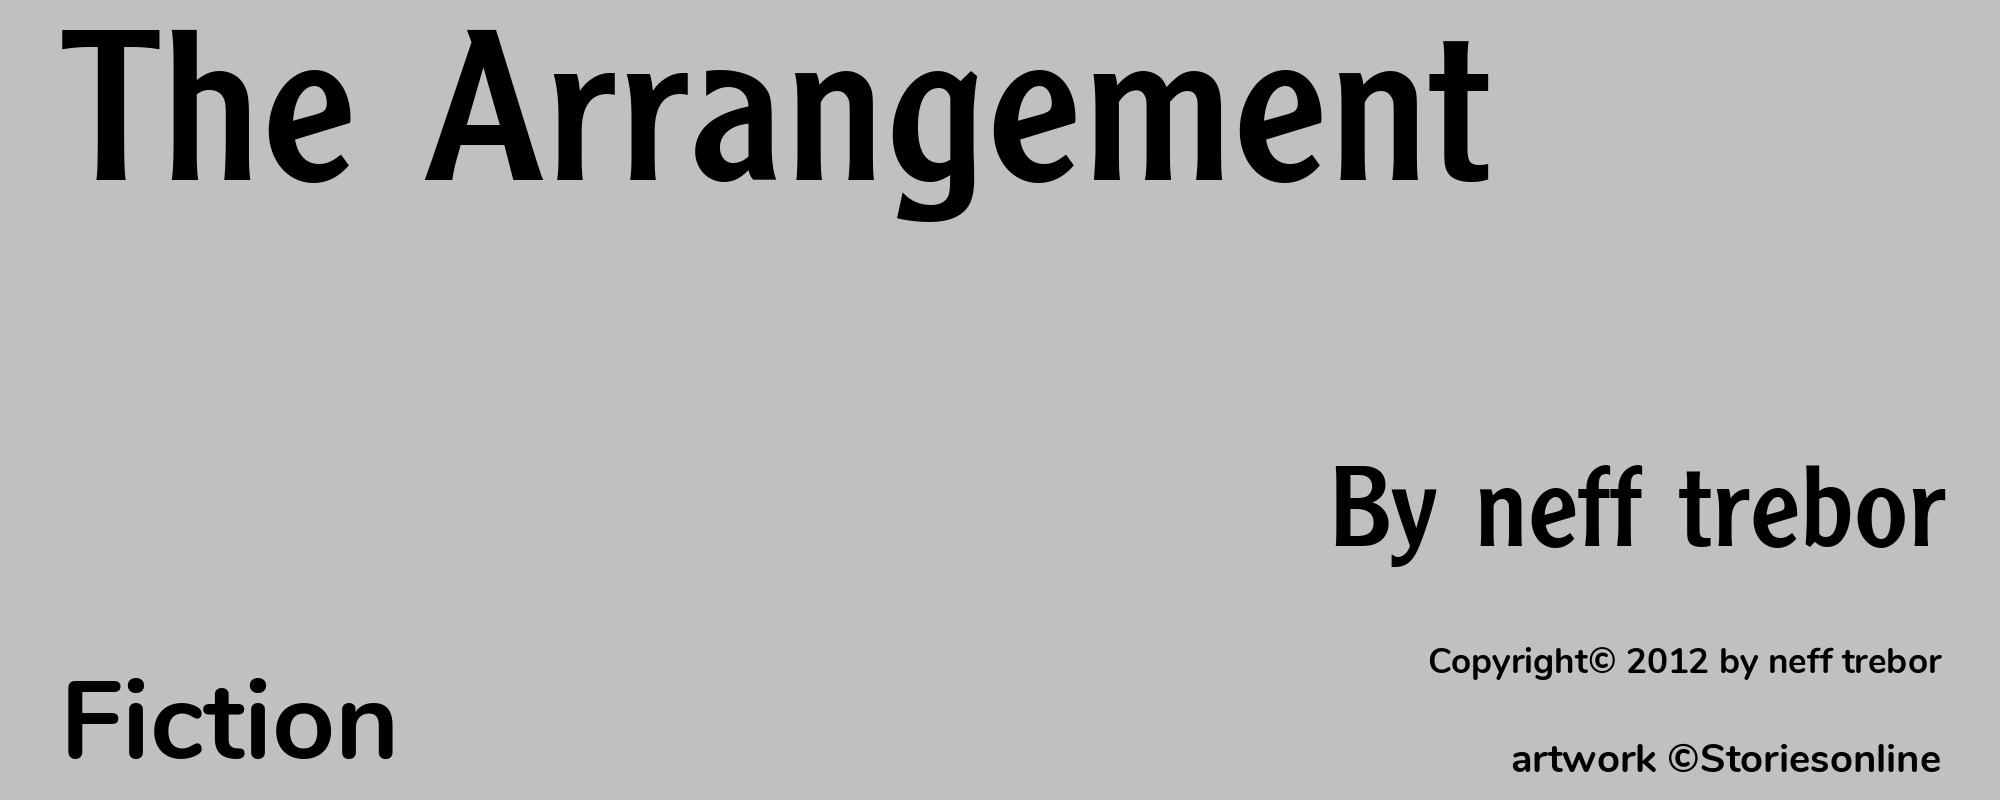 The Arrangement - Cover